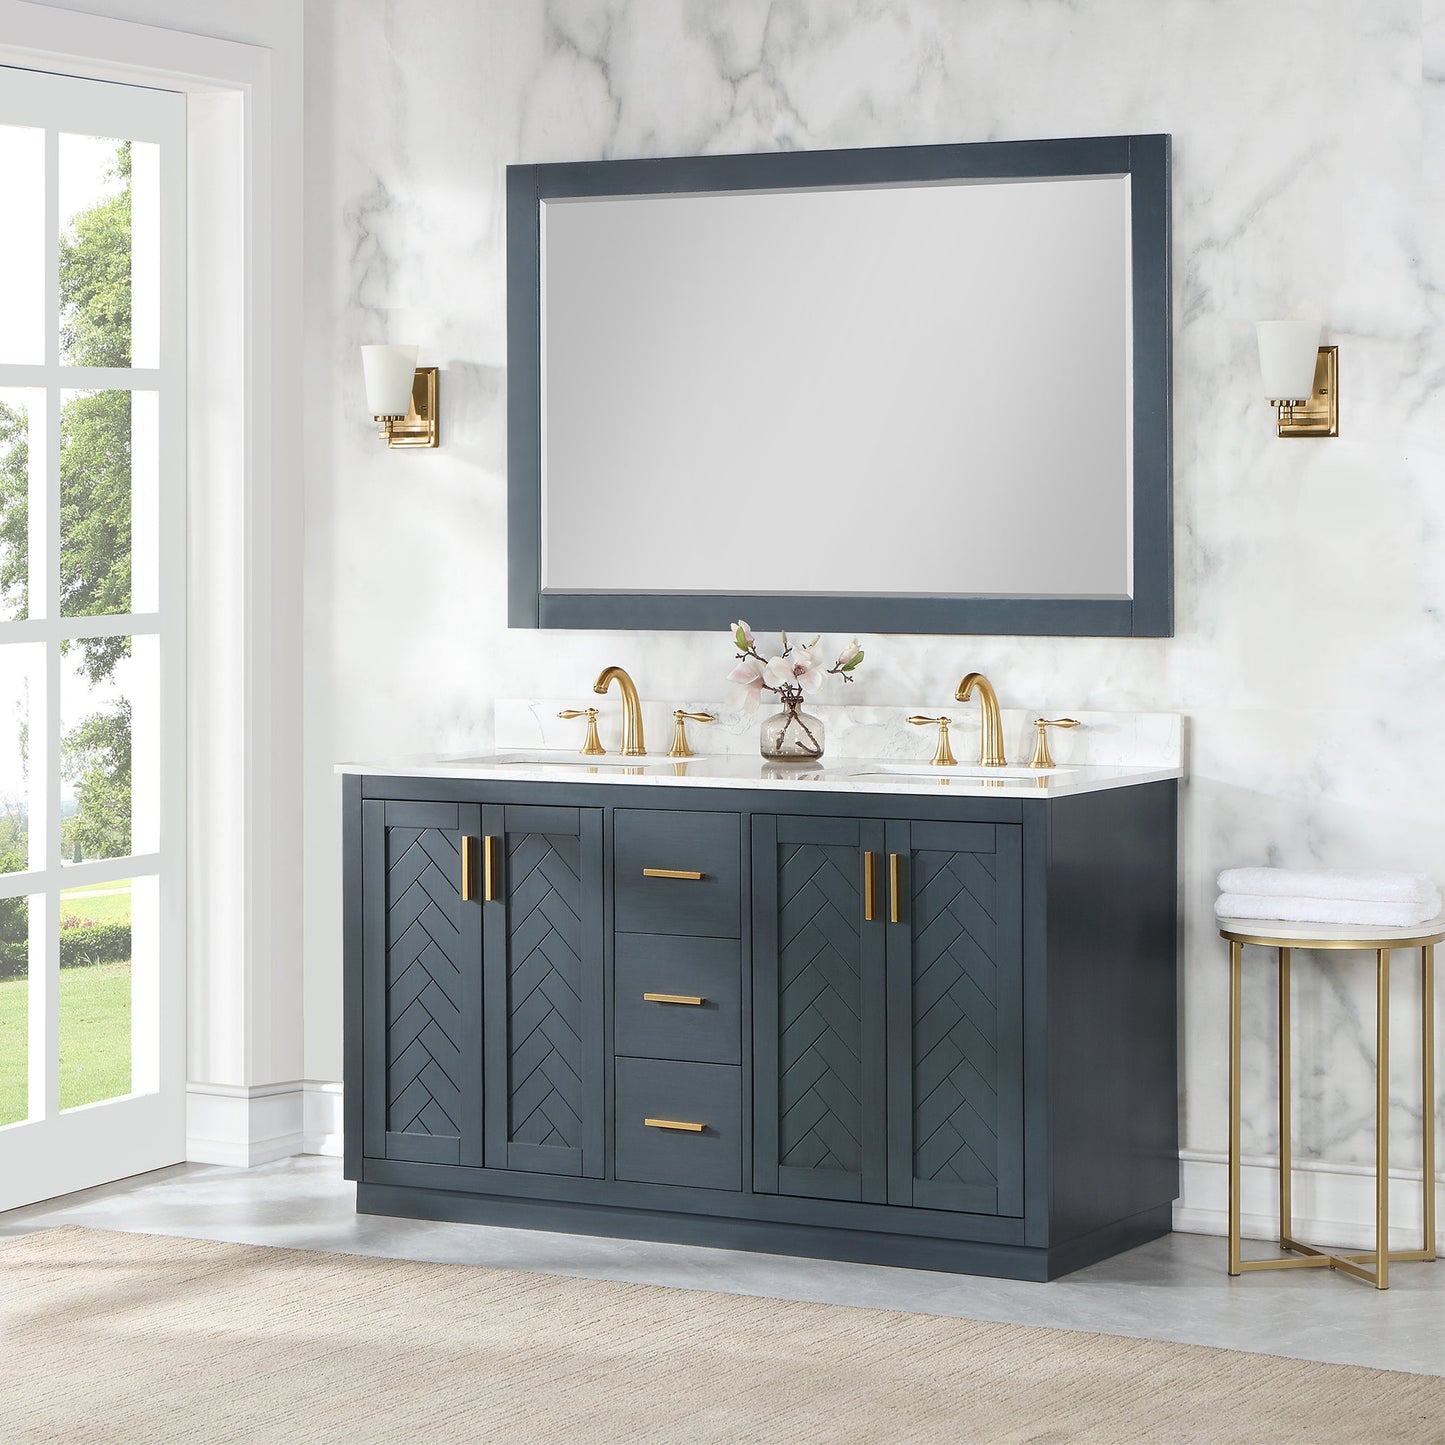 Maribella 58" Rectangular Bathroom Wood Framed Wall Mirror in White